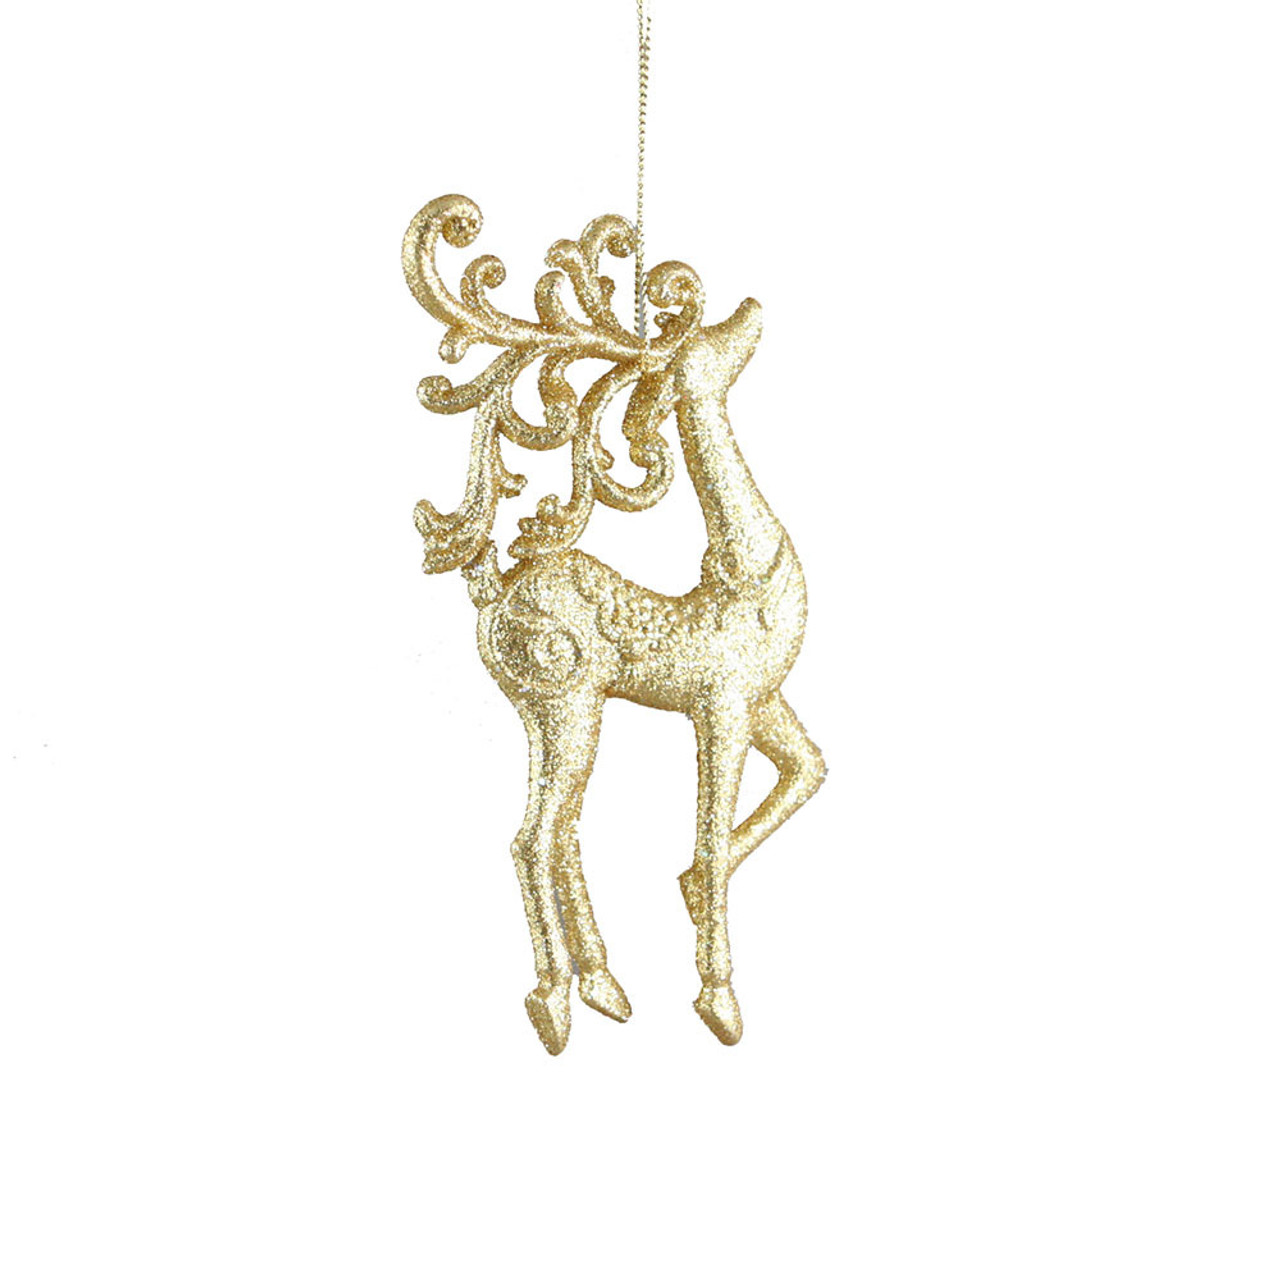 Gold Glittered Reindeer Christmas Ornament - 14cm